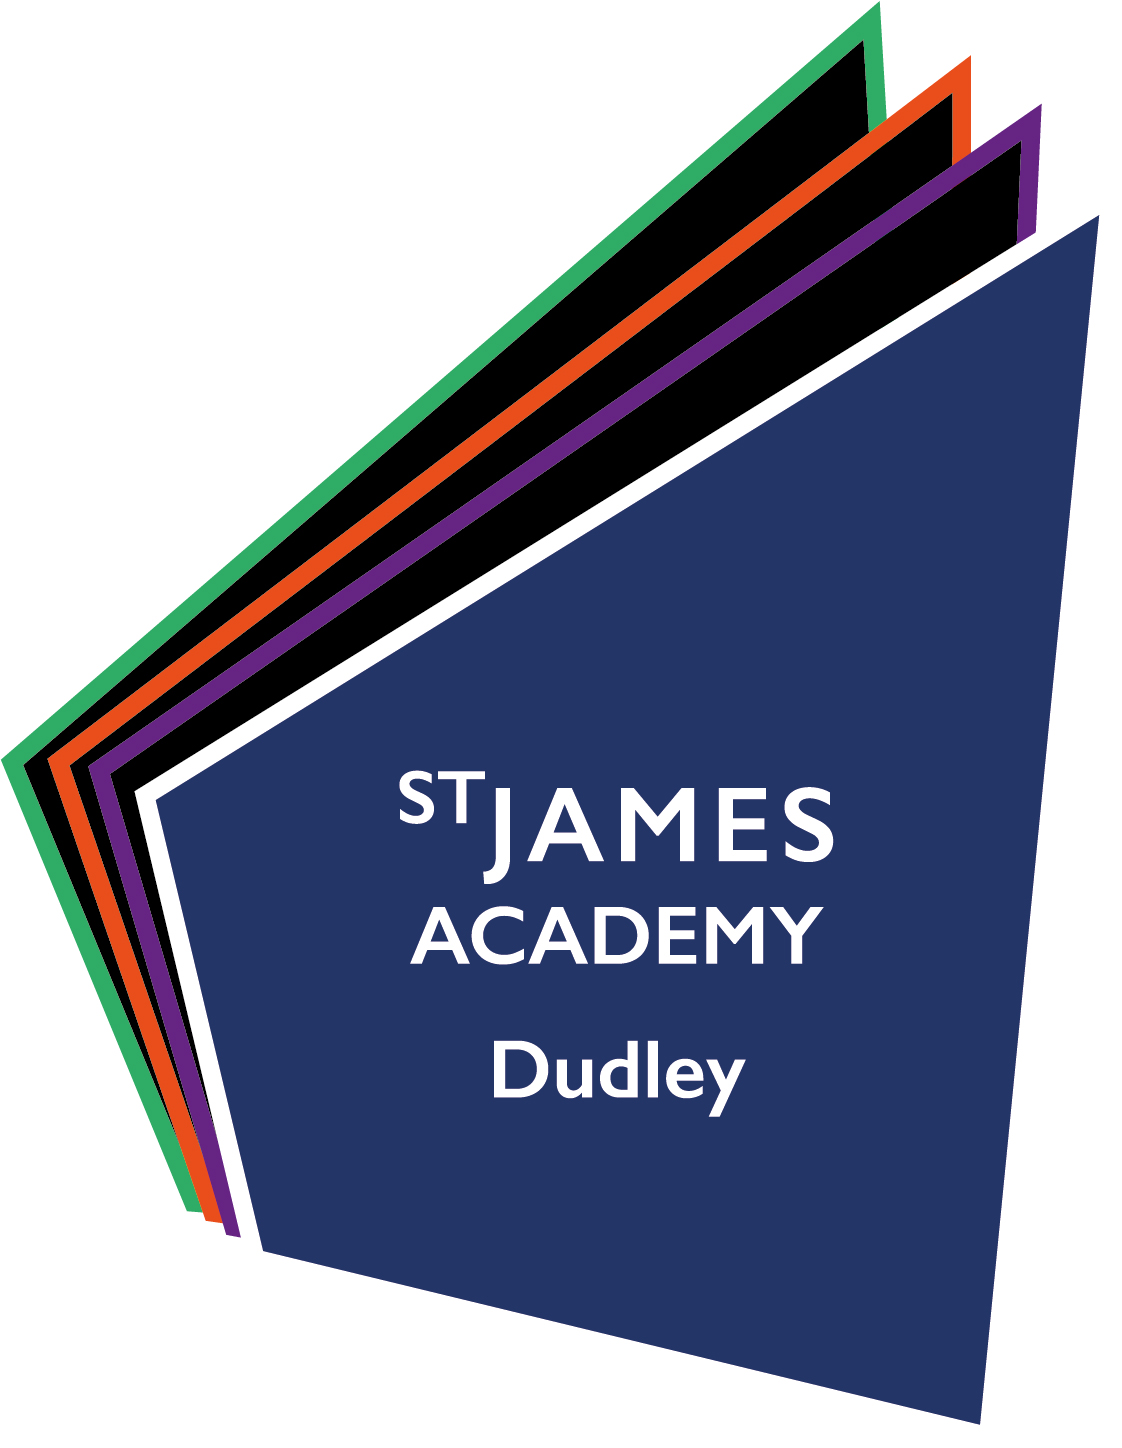 St James Academy